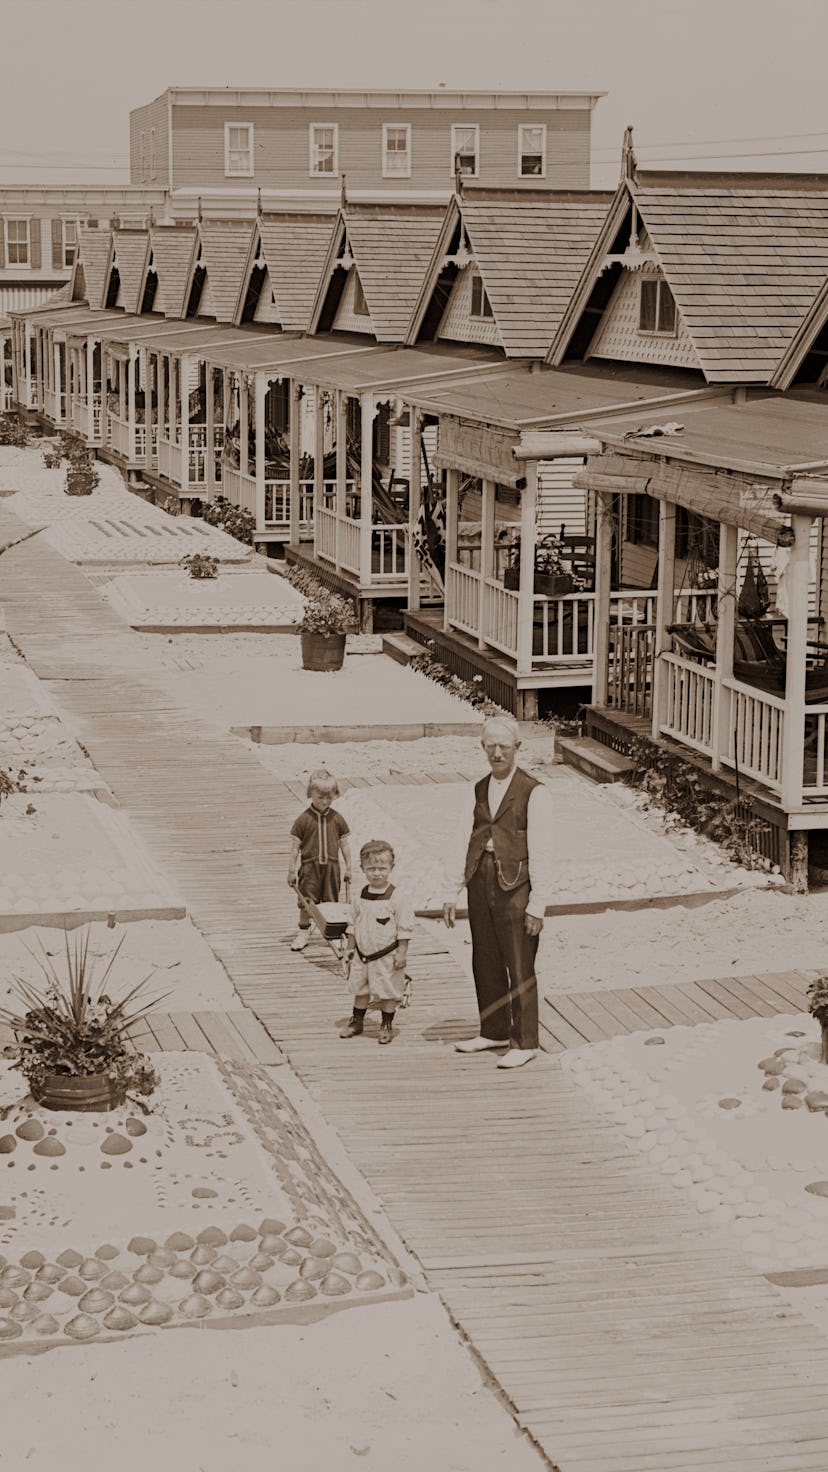 Bungalow colony in Rockaway, New York in the 1920s